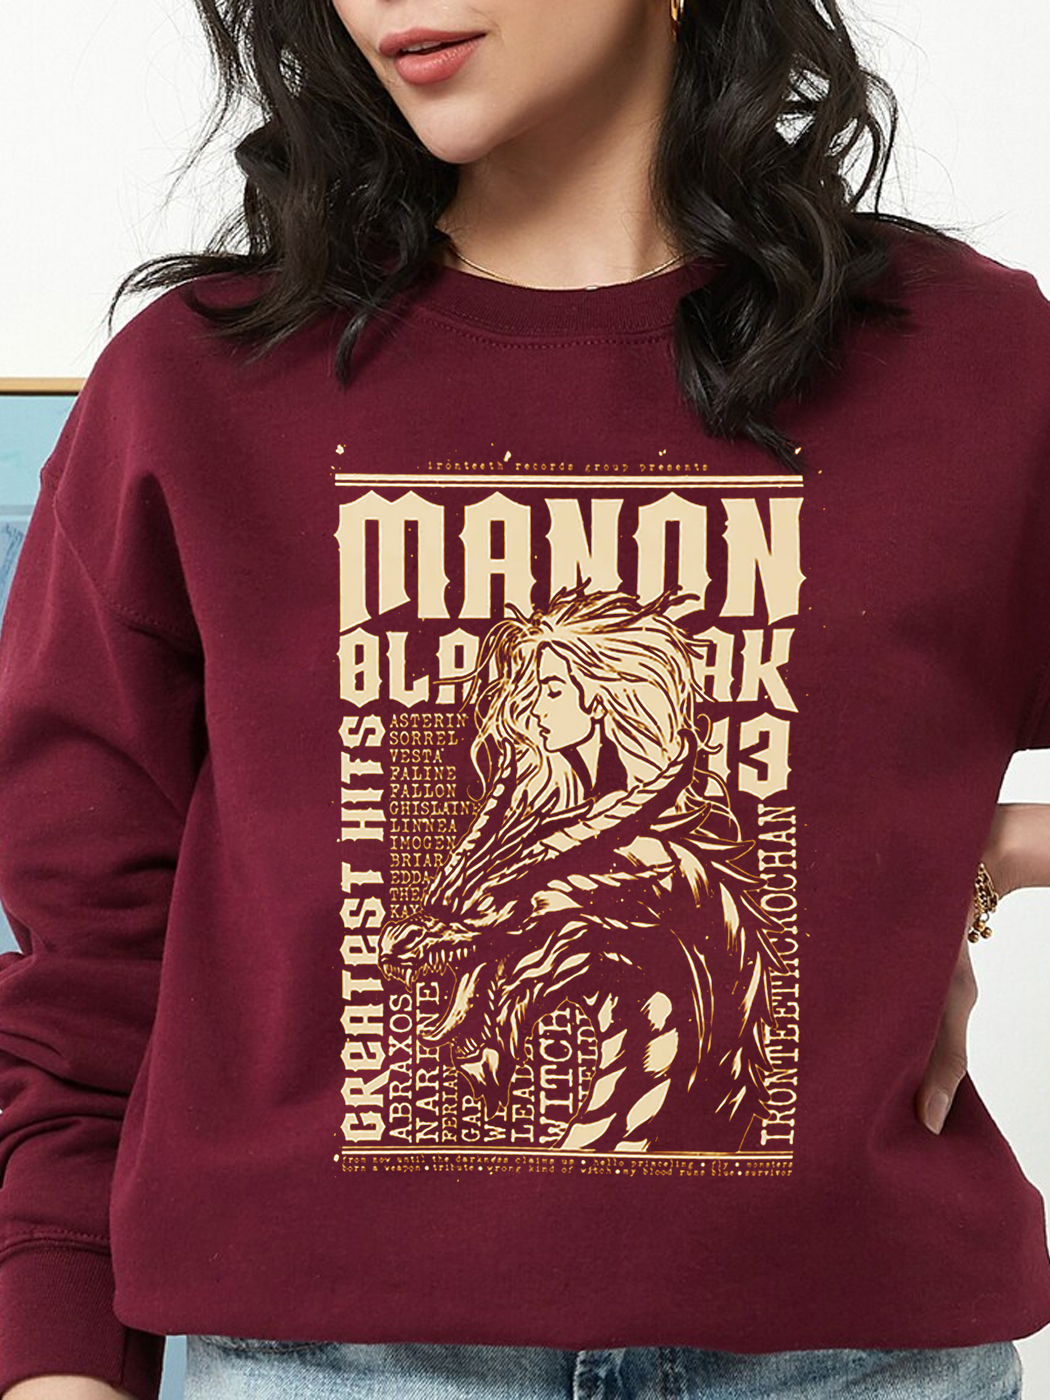 Women's Manon Blackbeak Greatest Hits Concert Sweatshirt